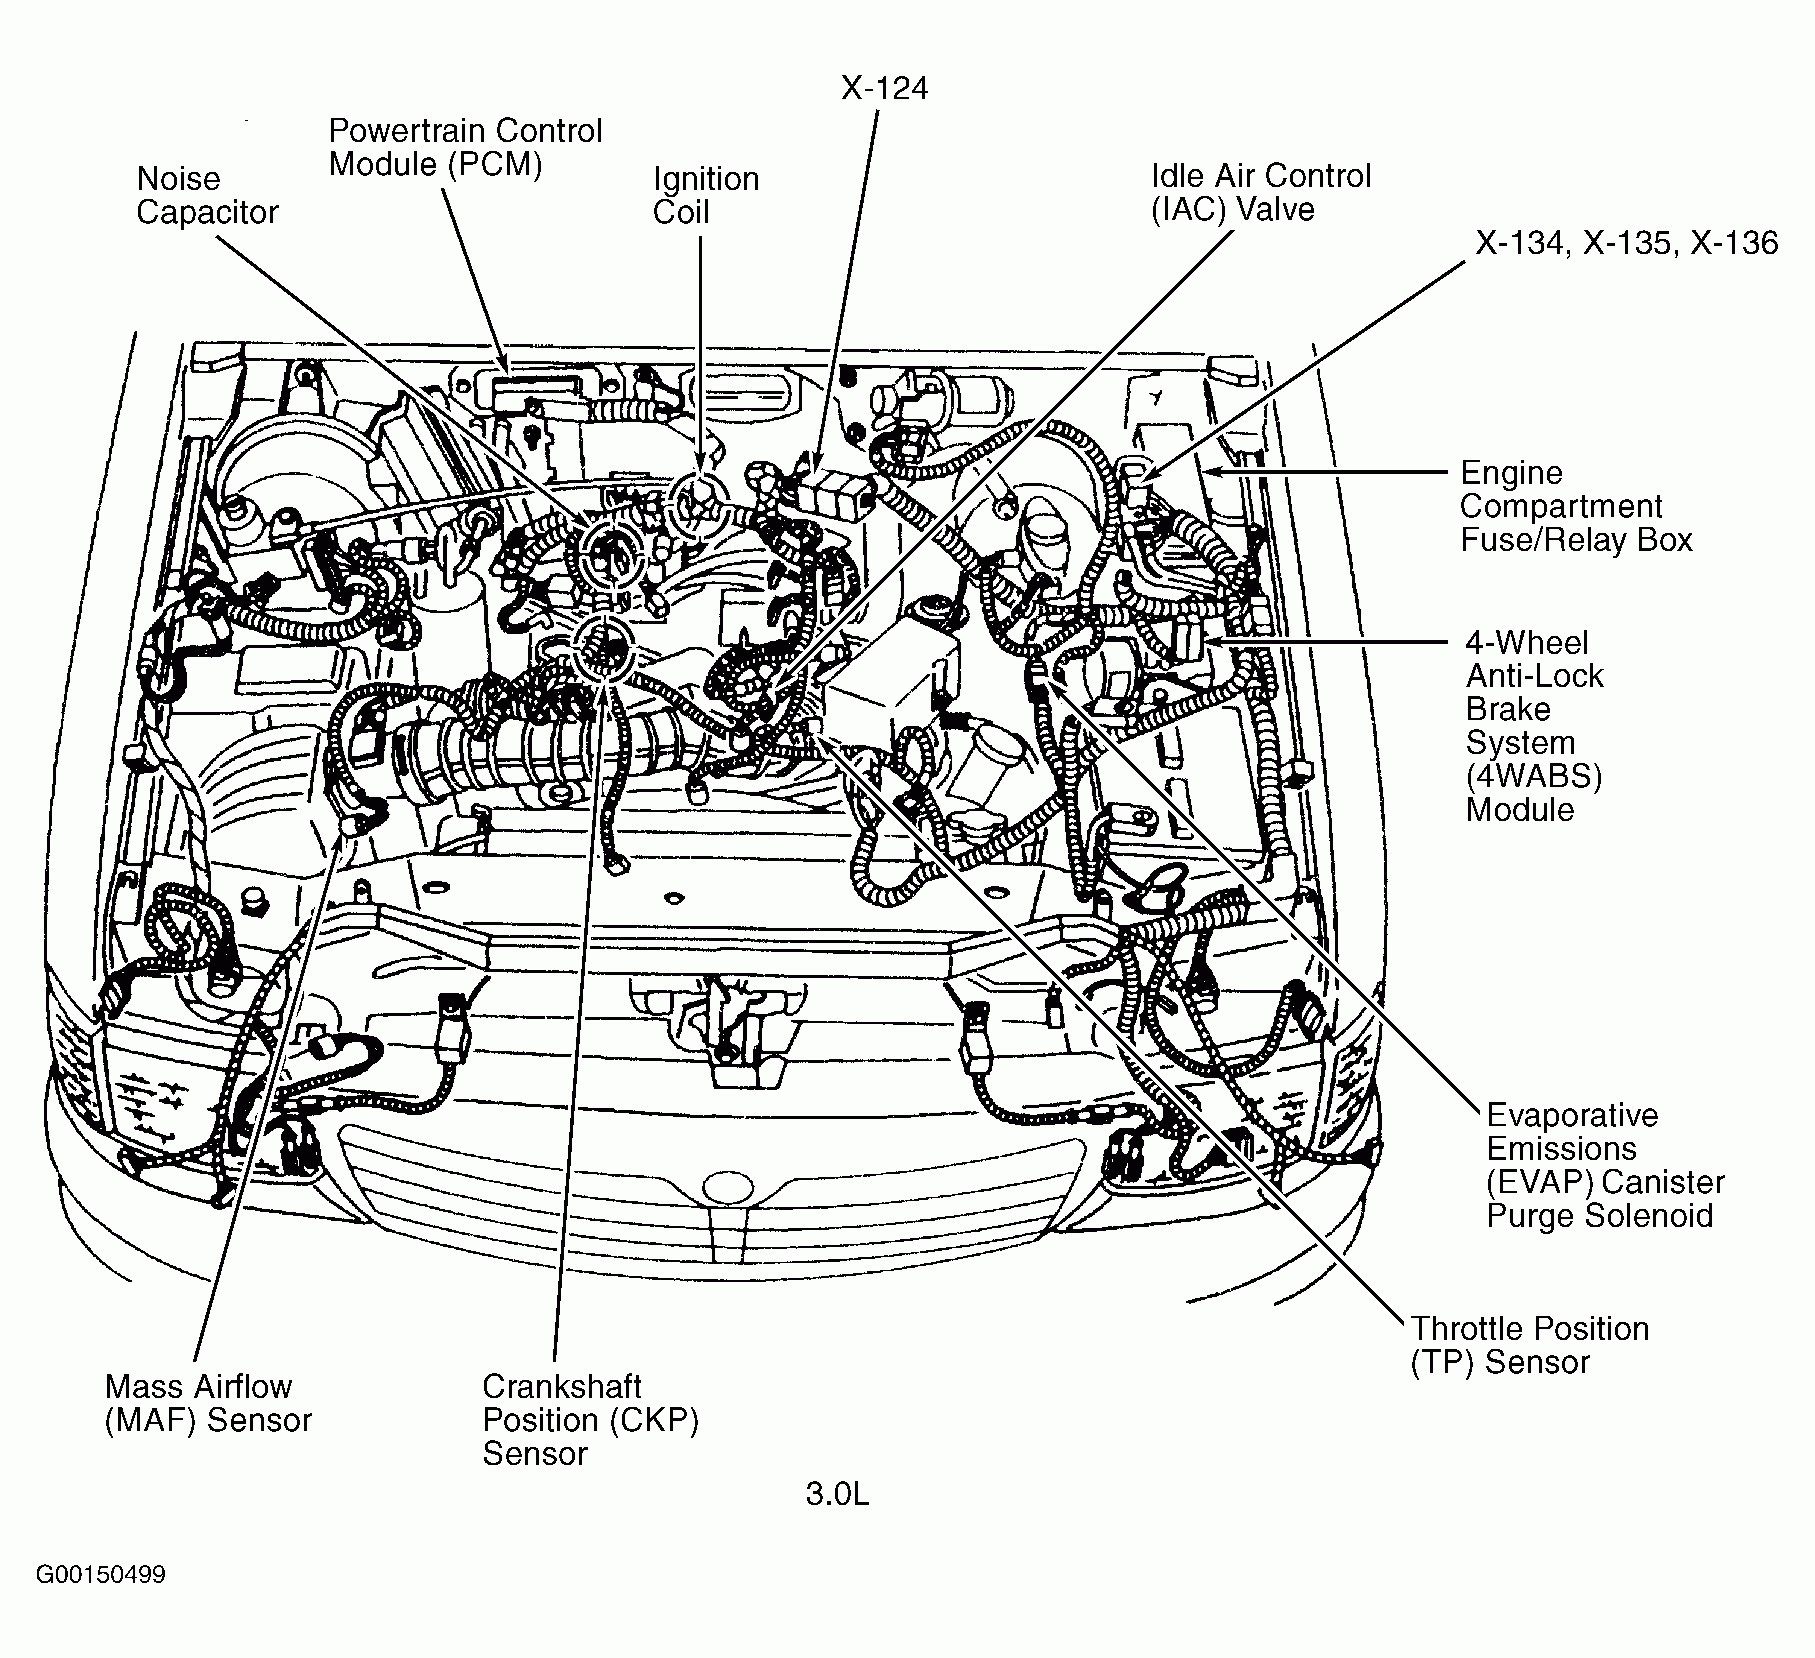 Vw 2 0 Engine Diagram 2 Mazda 6 Engine Diagram Data Schematics Wiring Diagram • Of Vw 2 0 Engine Diagram 2